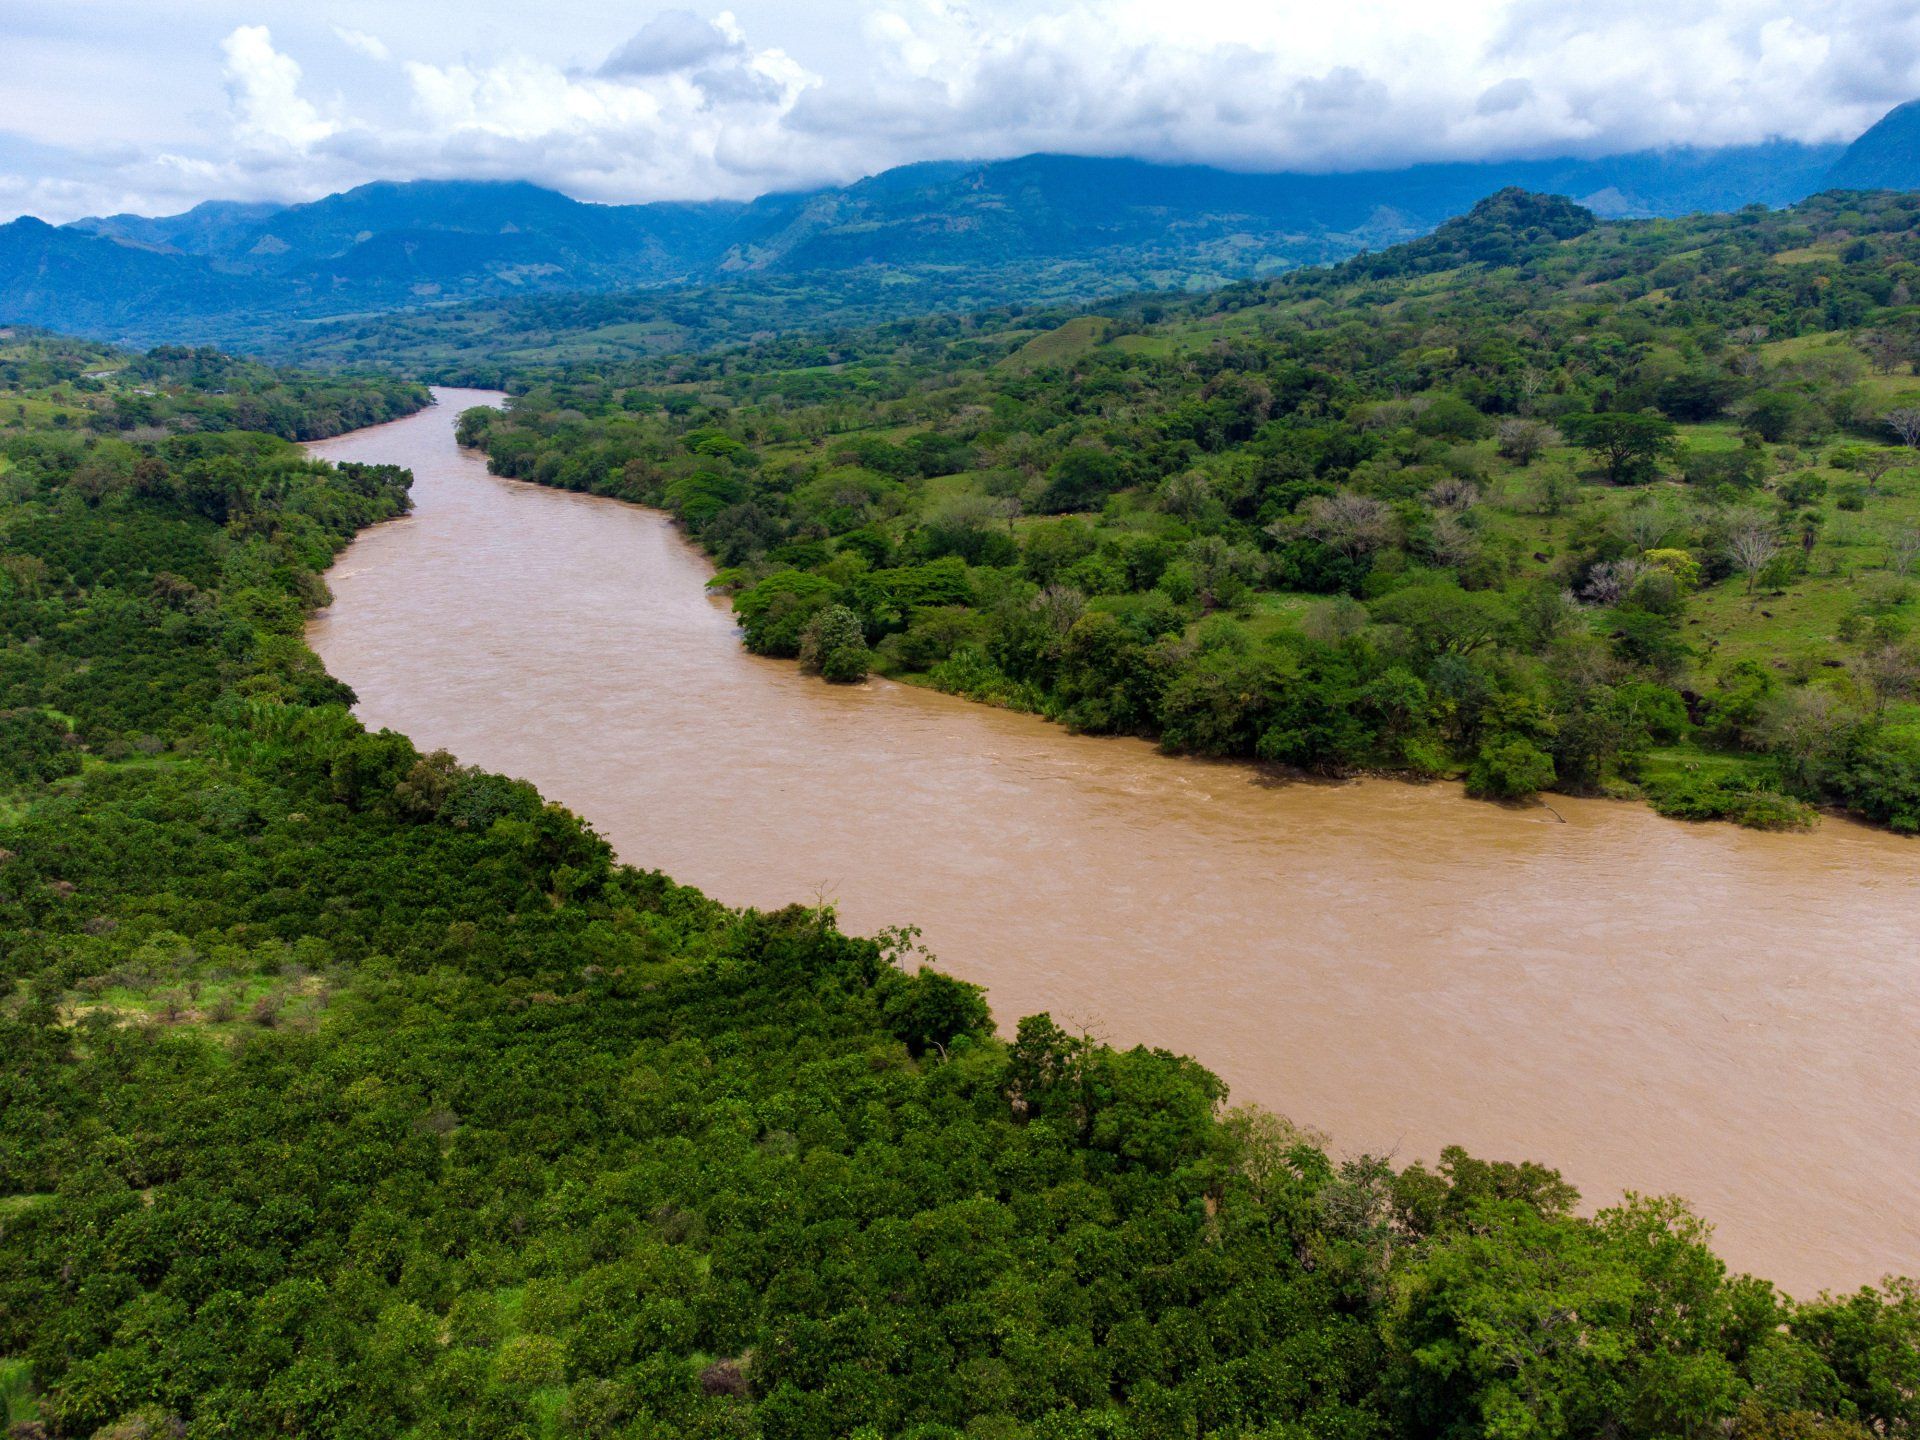 Caminatas ecológicas al Rio Cauca en Cauca Viejo Antioquia